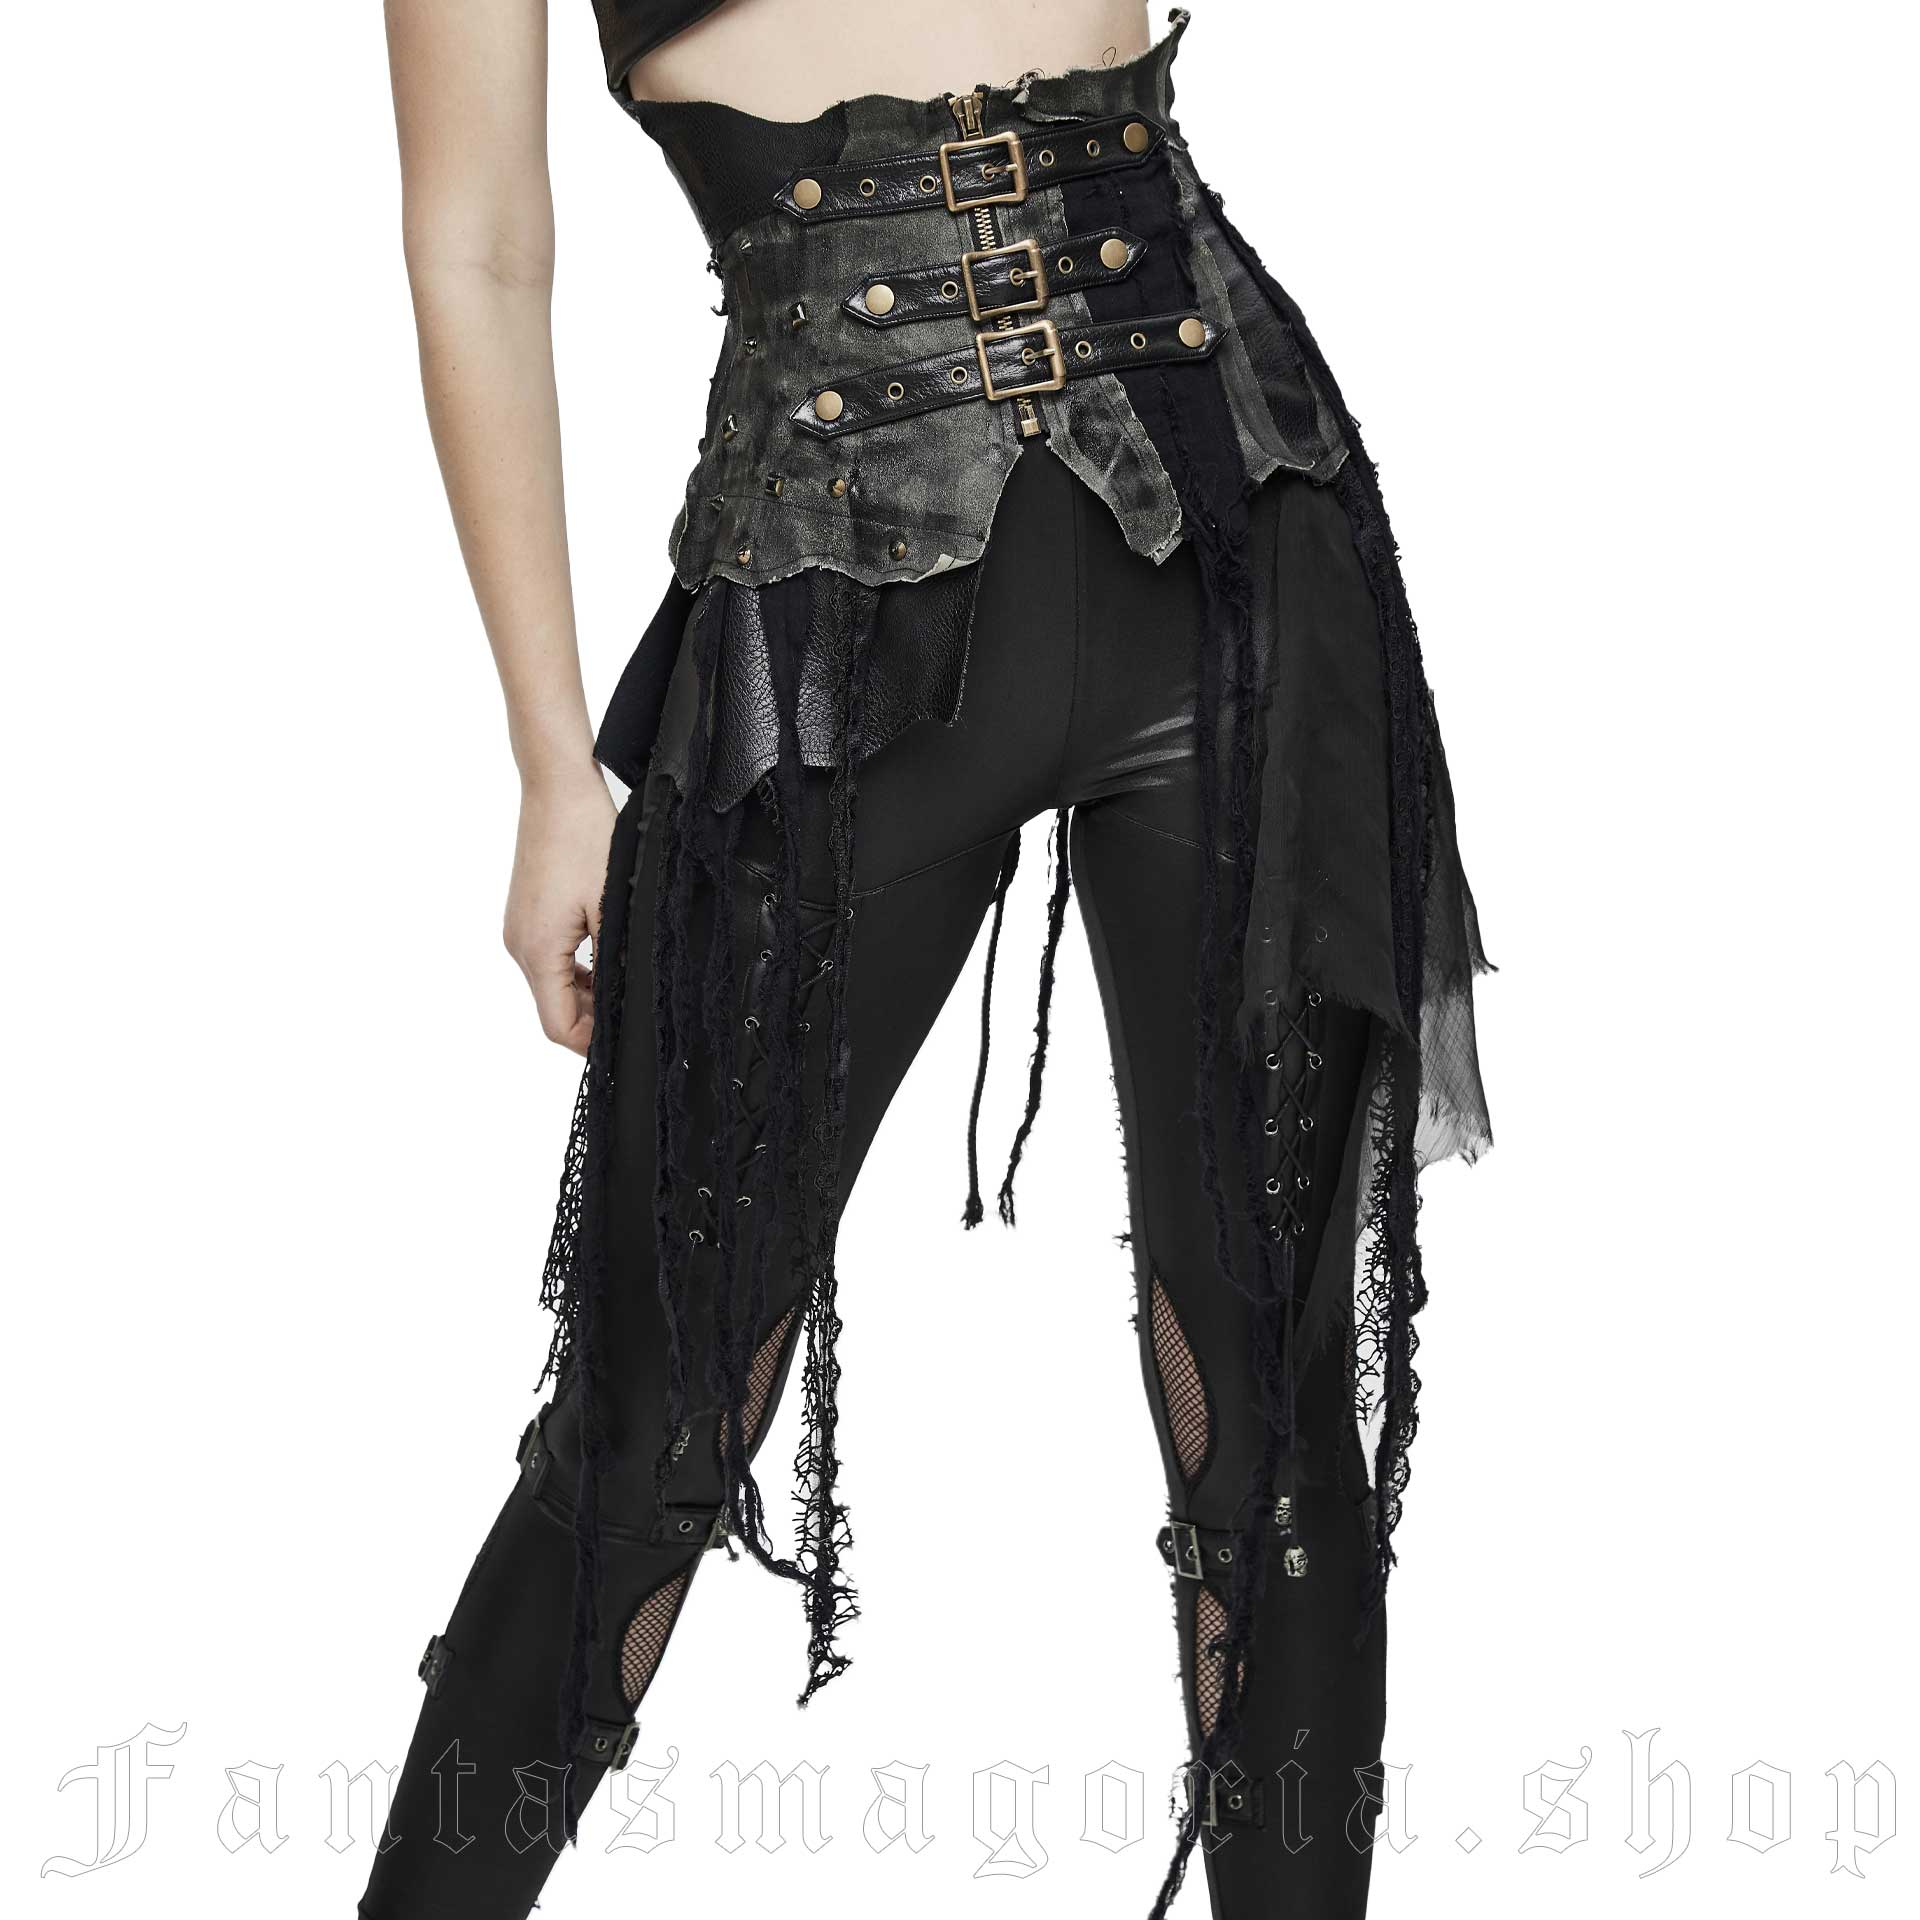 https://fantasmagoria.shop/74047/bride-of-frankenstein-corset.jpg